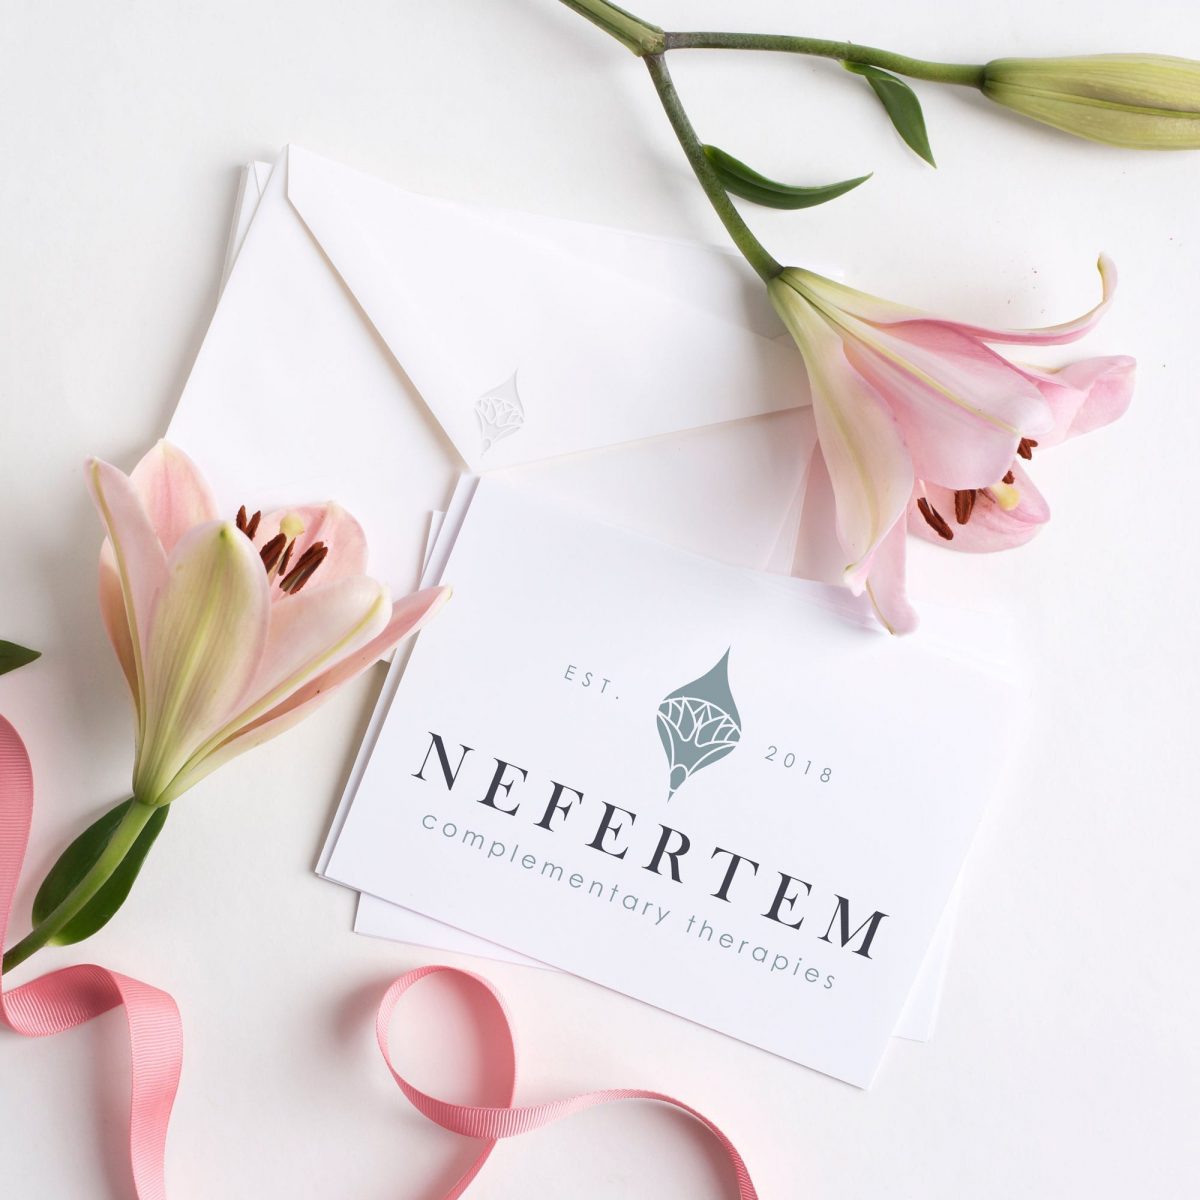 nefertem therapies custom branding